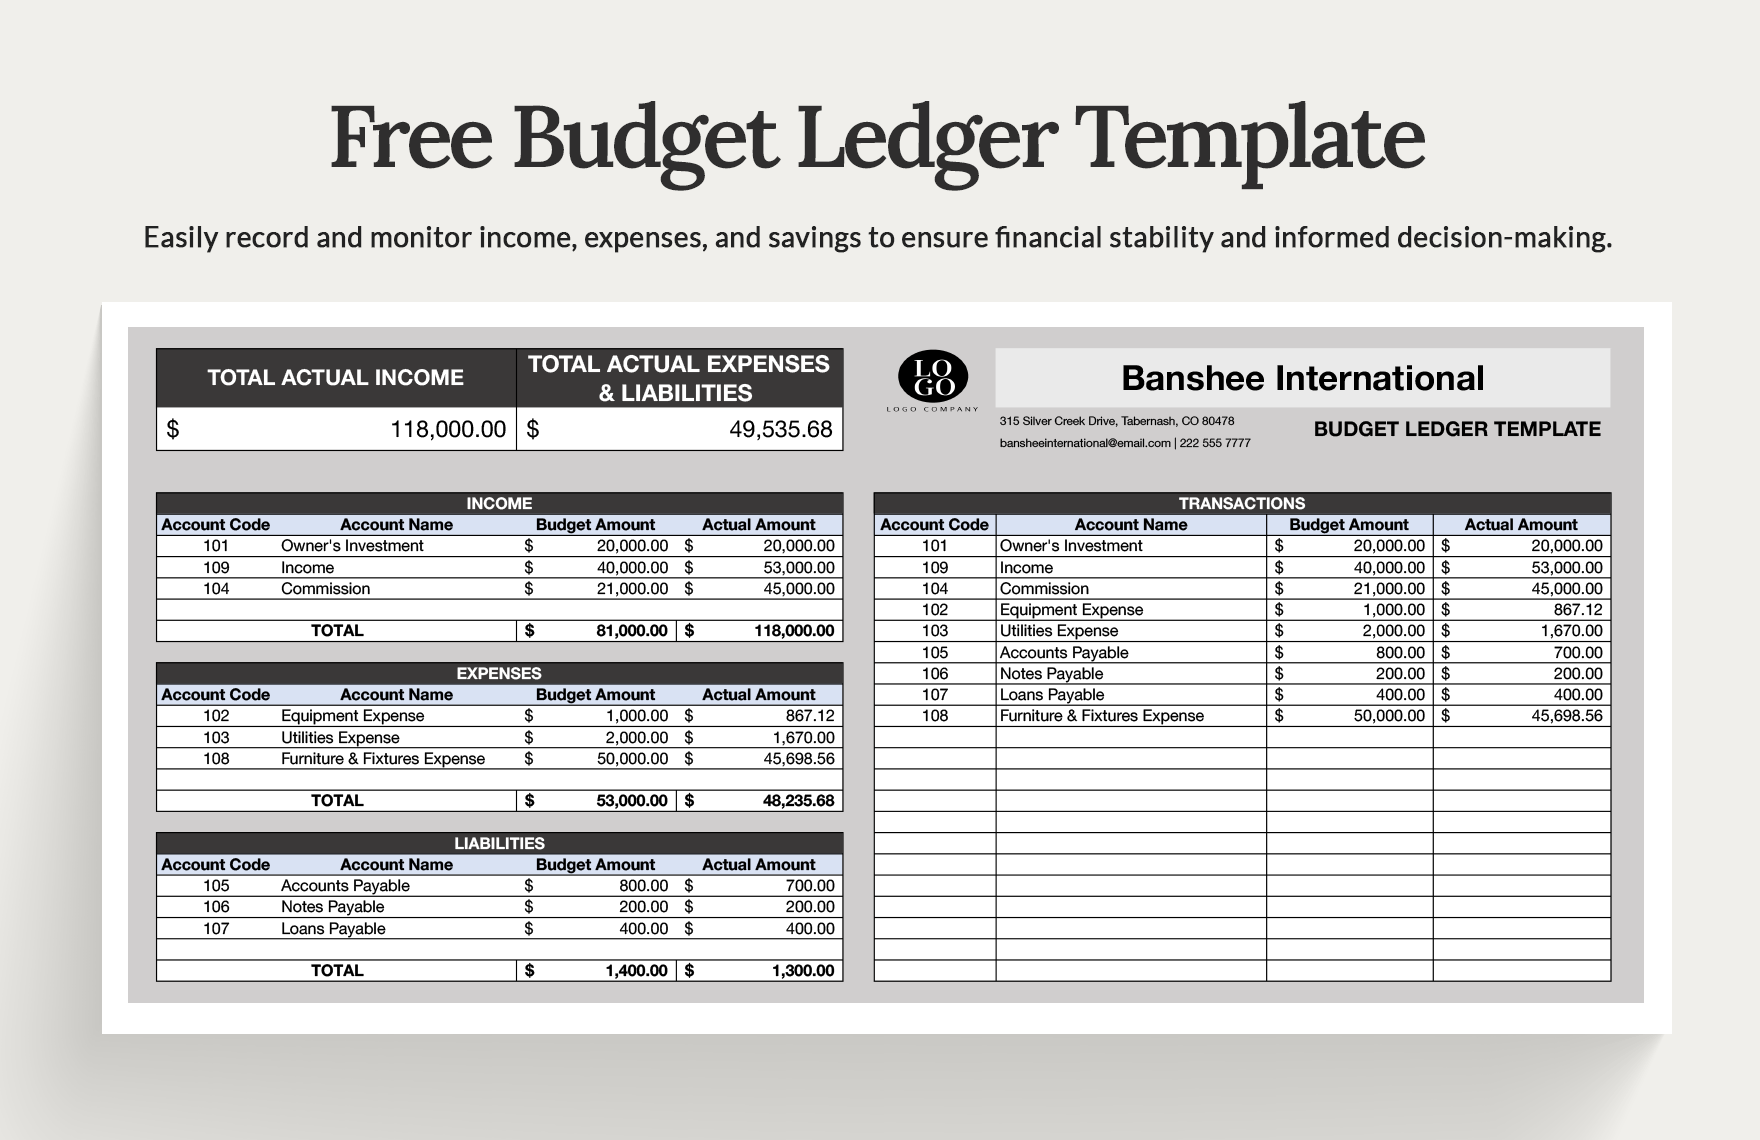 Free Budget Ledger Template